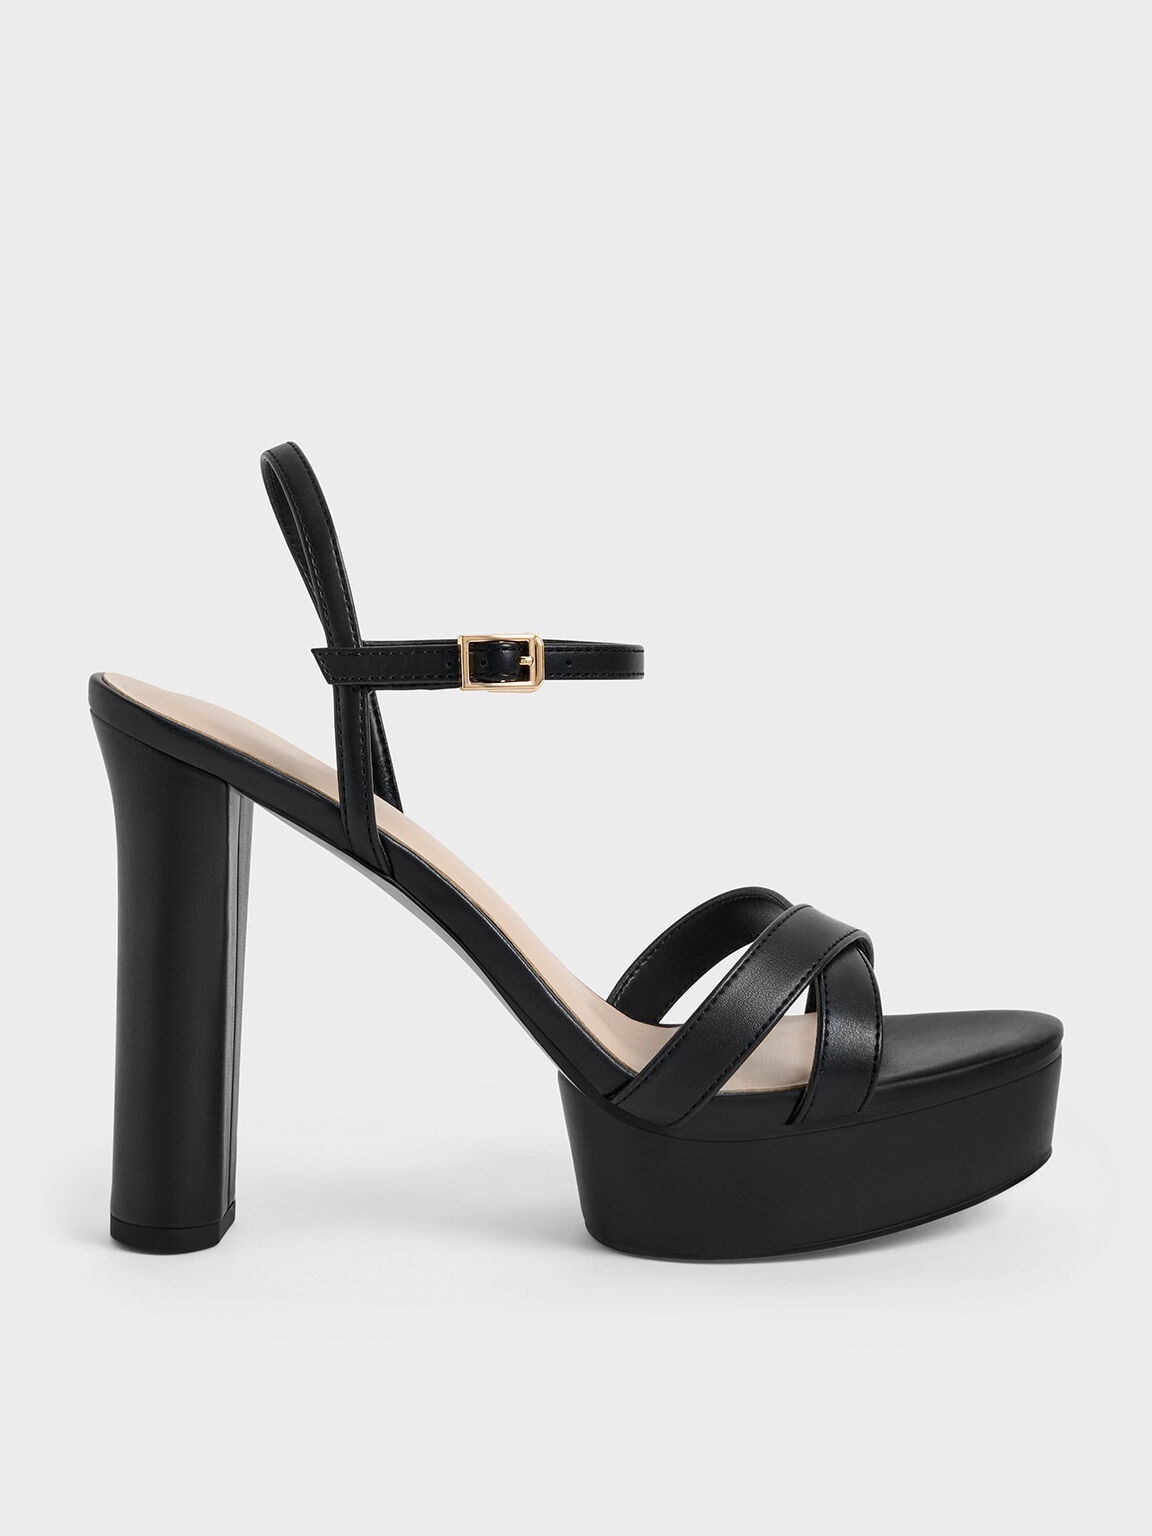 Clover Black Strap Heeled Sandals | PrettyLittleThing